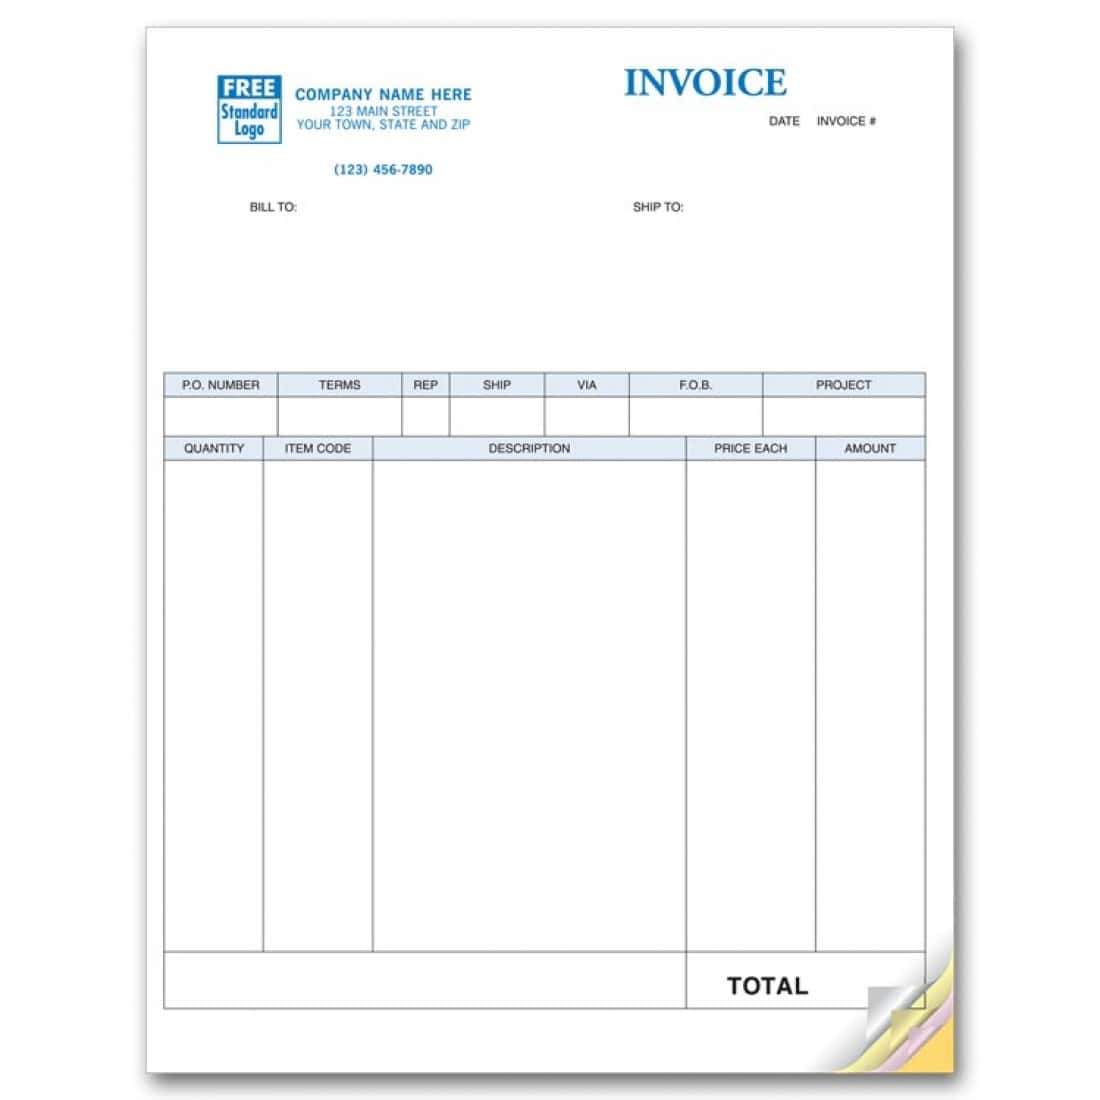 Quickbooks Invoice Template Excel And Quickbooks Invoice Date Format